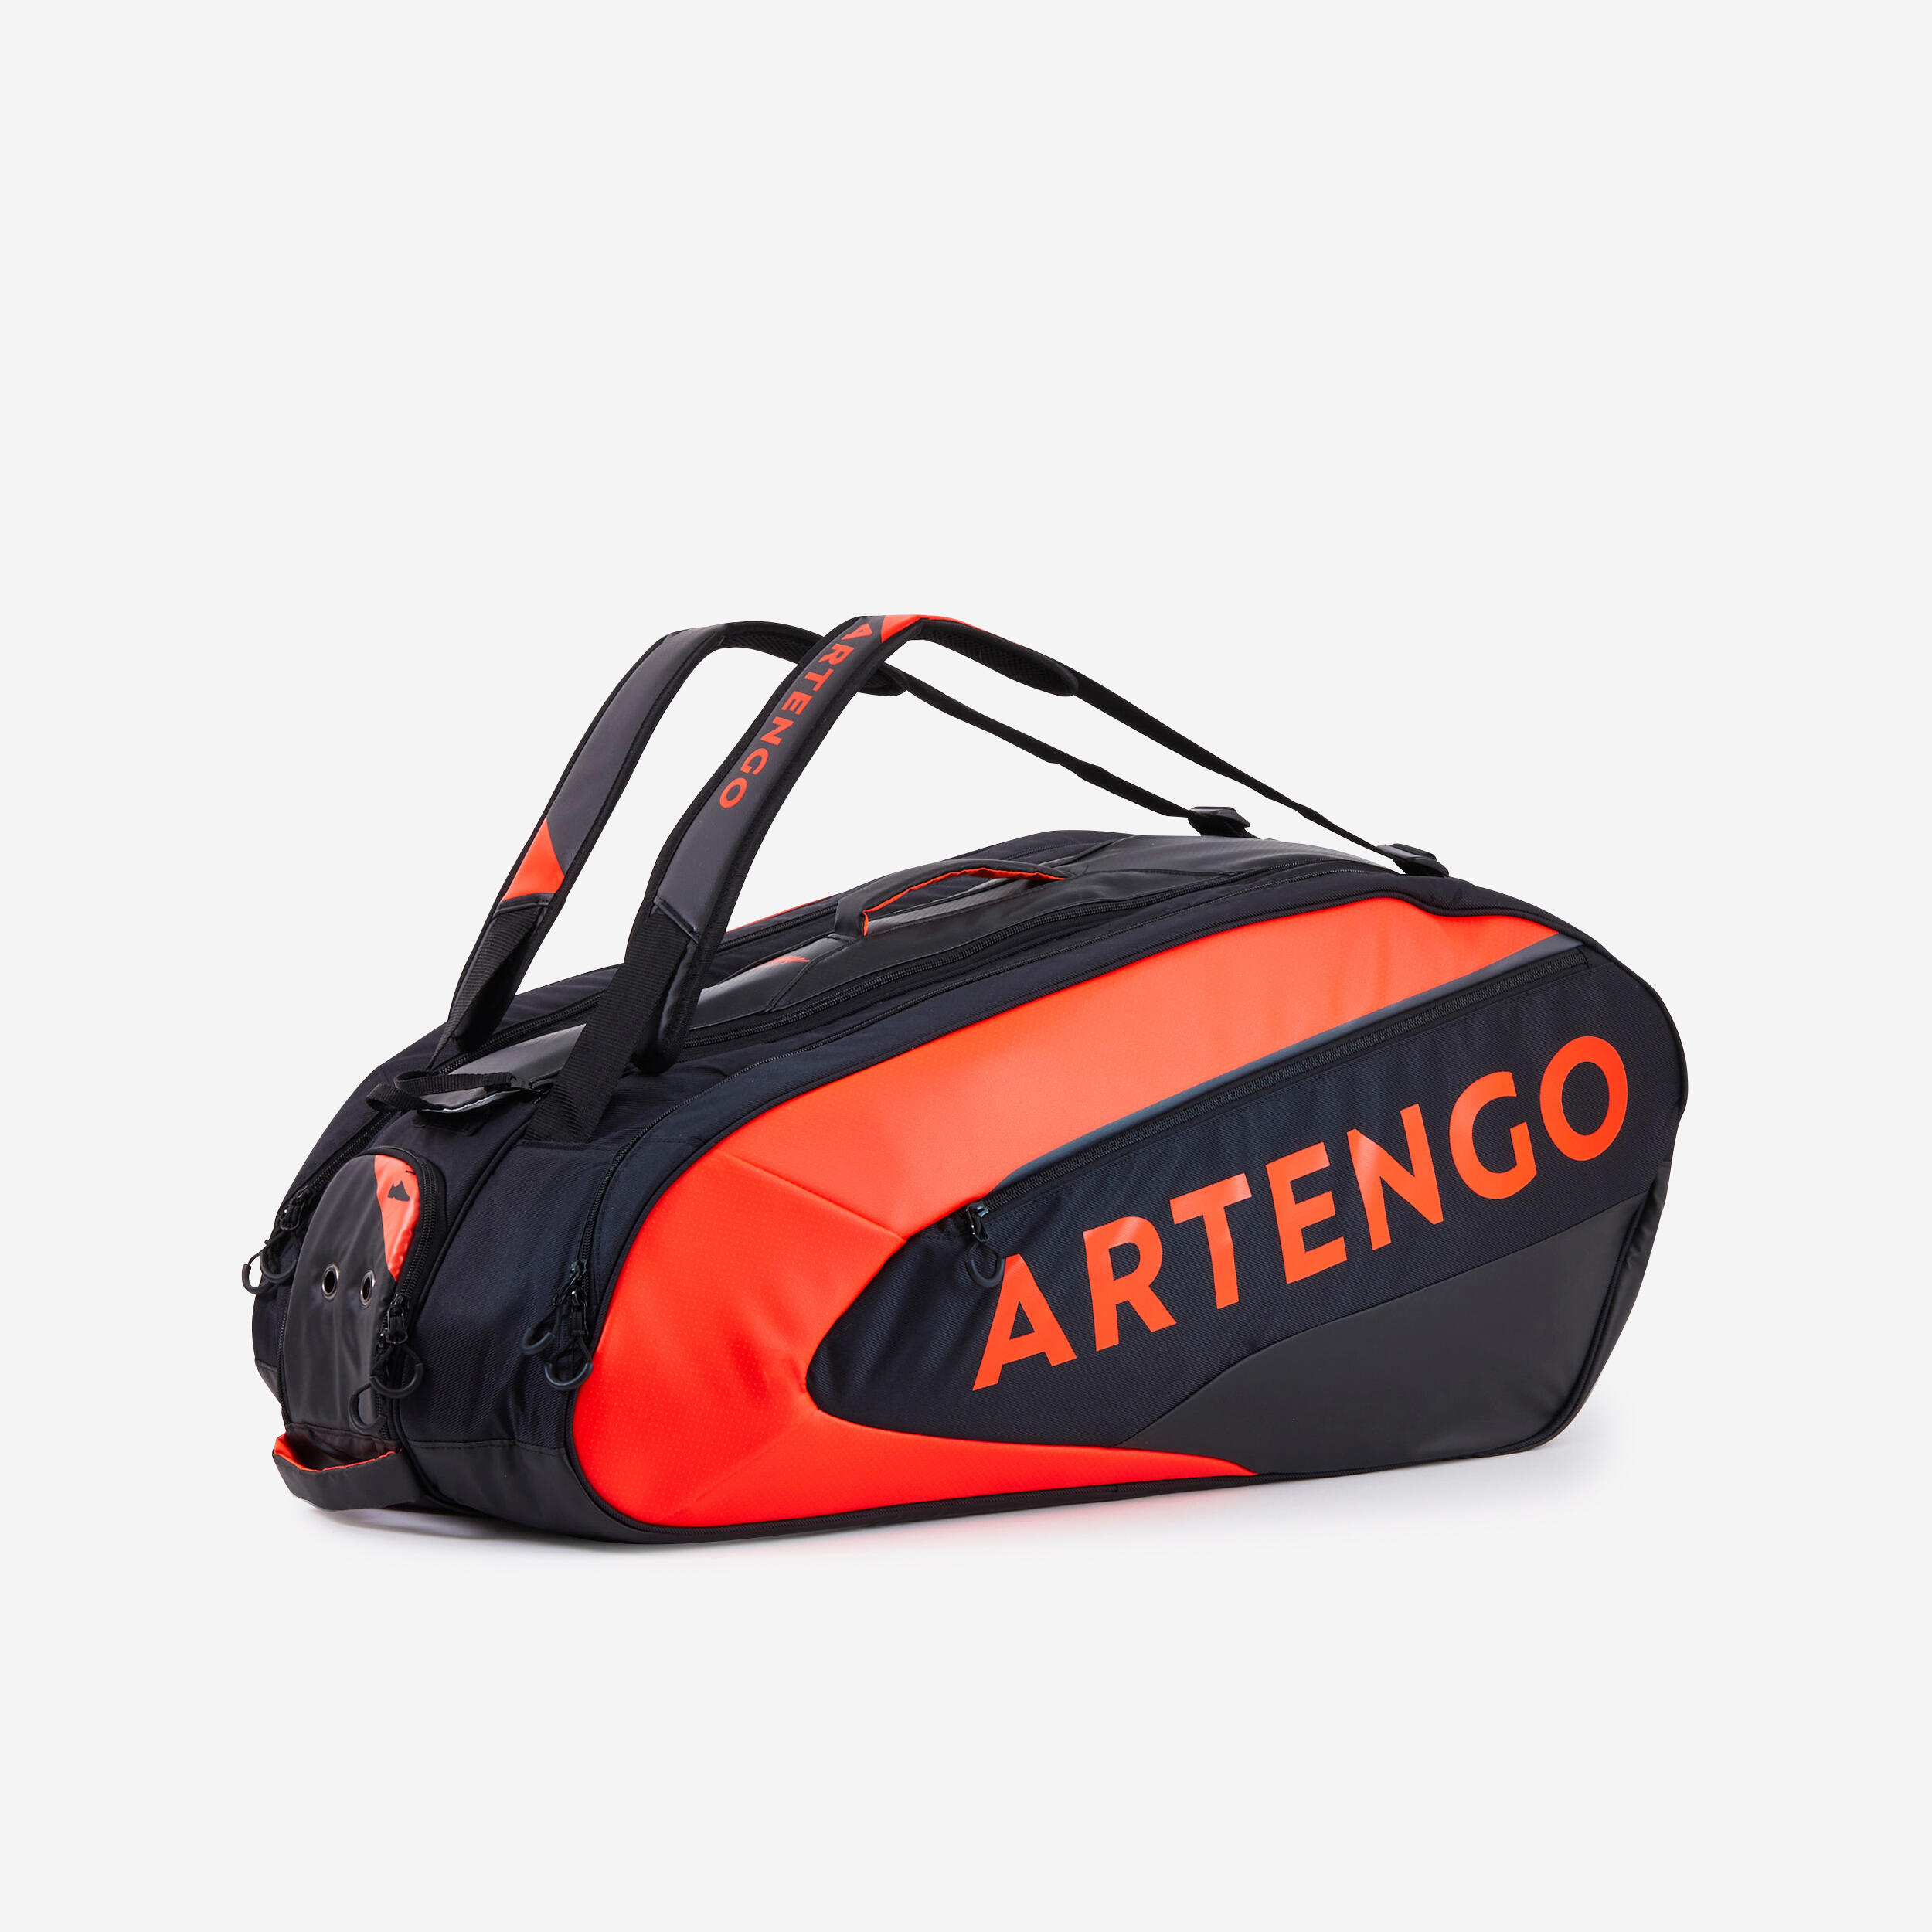 12-Racket Insulated Tennis Bag - XL Pro Power Black/Orange